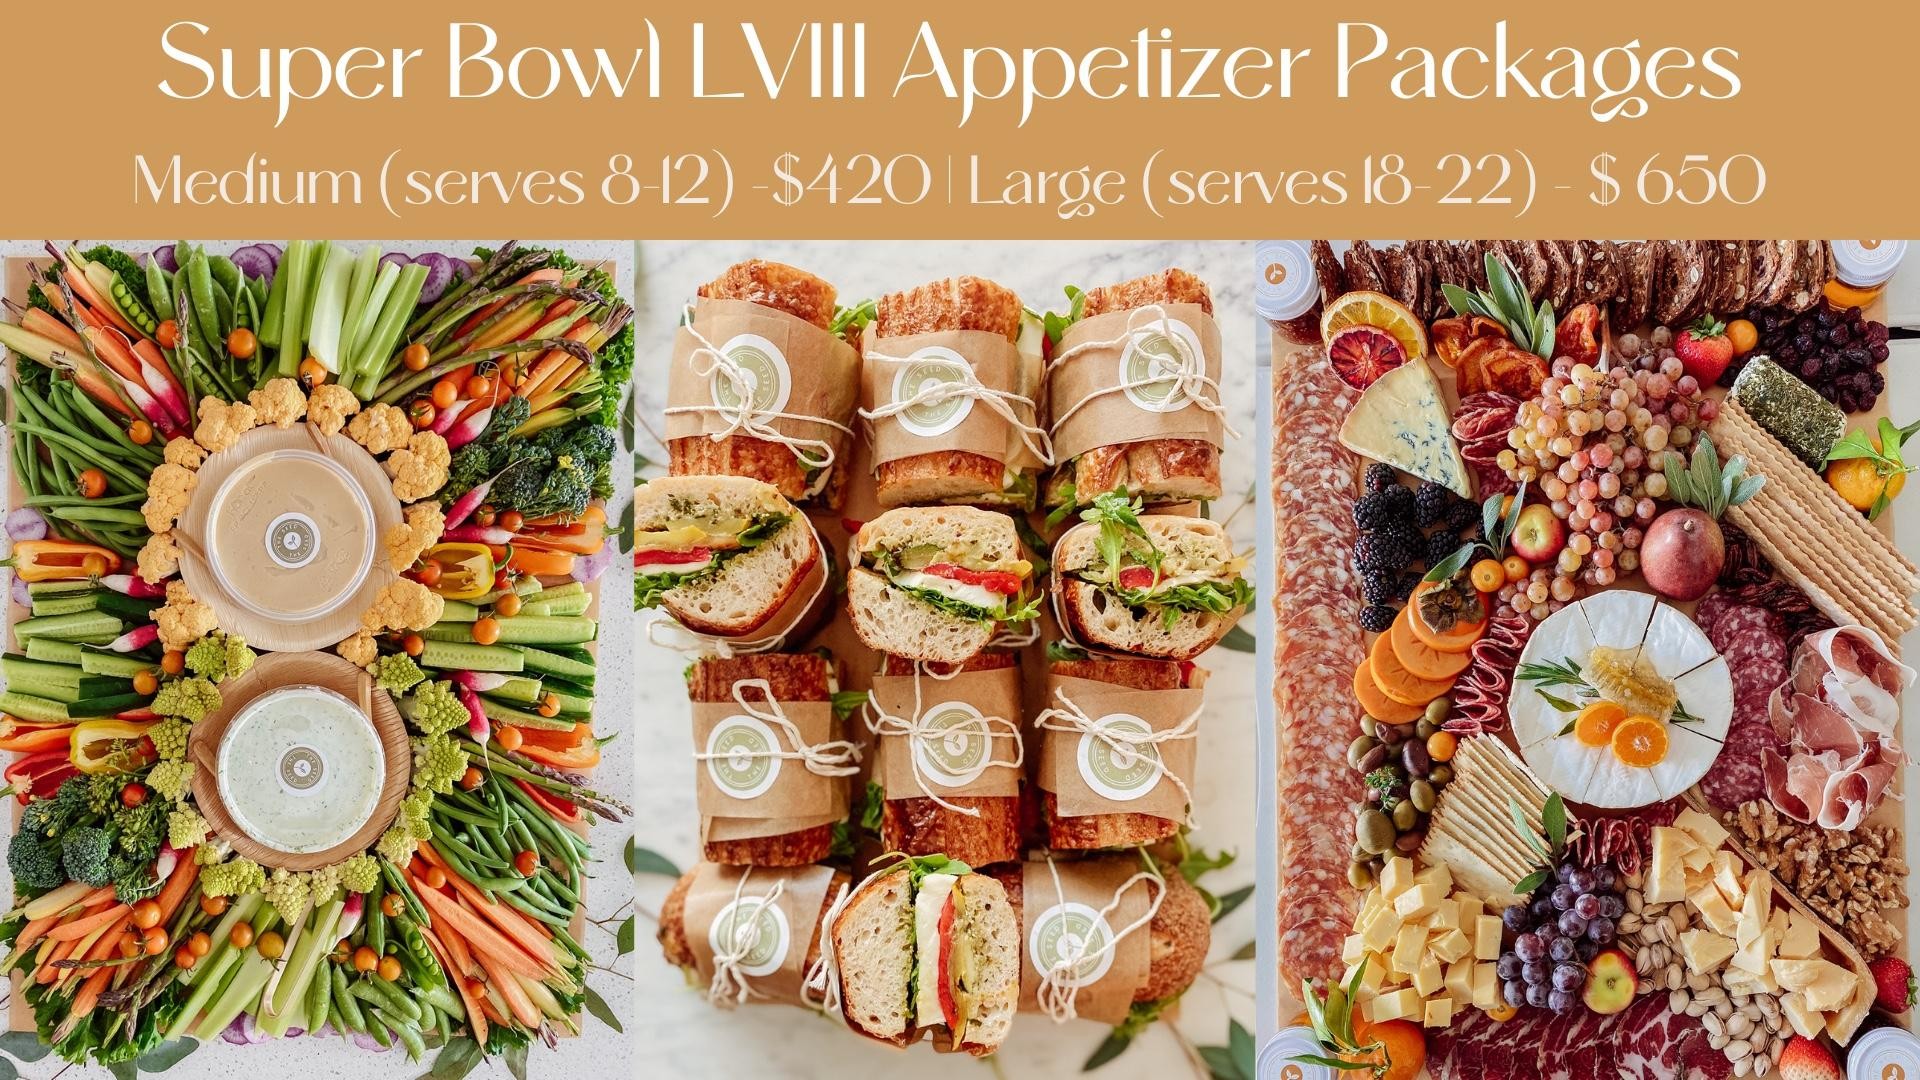 Medium Super Bowl Package w/ cheese & charcuterie, crudites & sandwiches (serves 8-12)